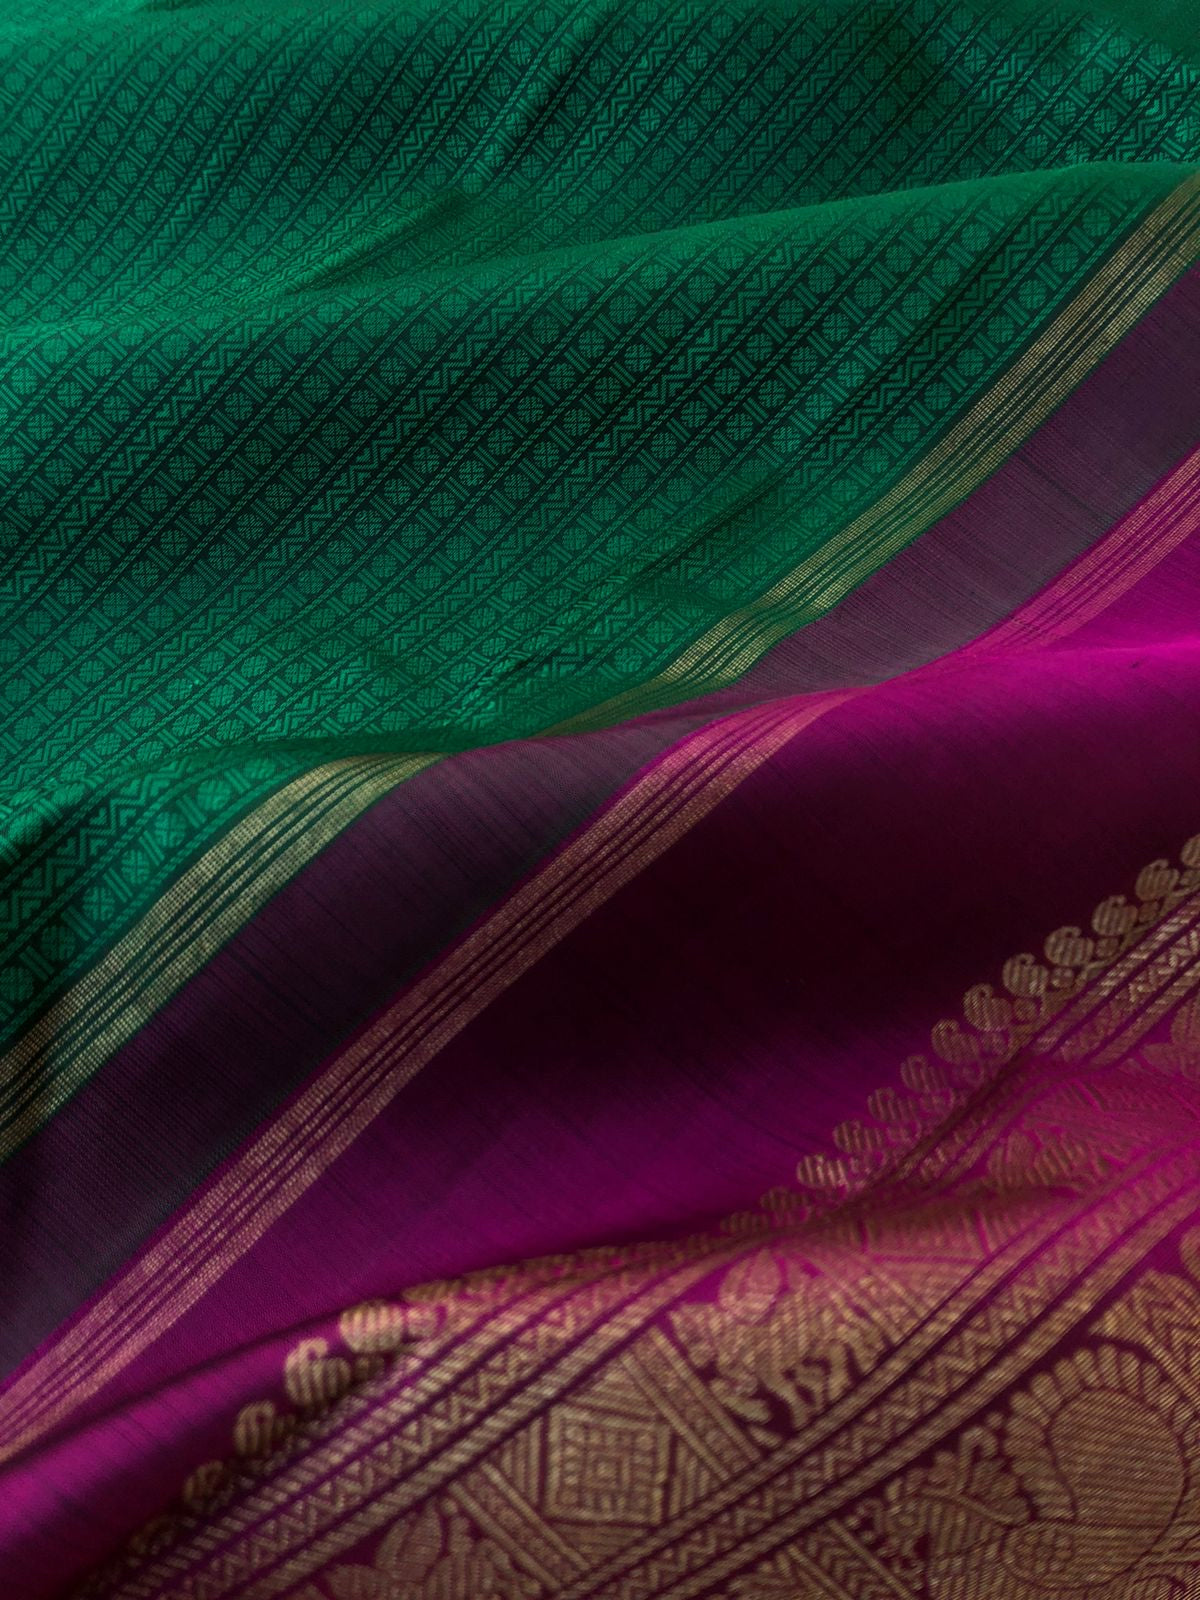 Yarn play on Kanchivaram - most beautiful Meenakshi green and majenta purple vertical varusai pett woven body